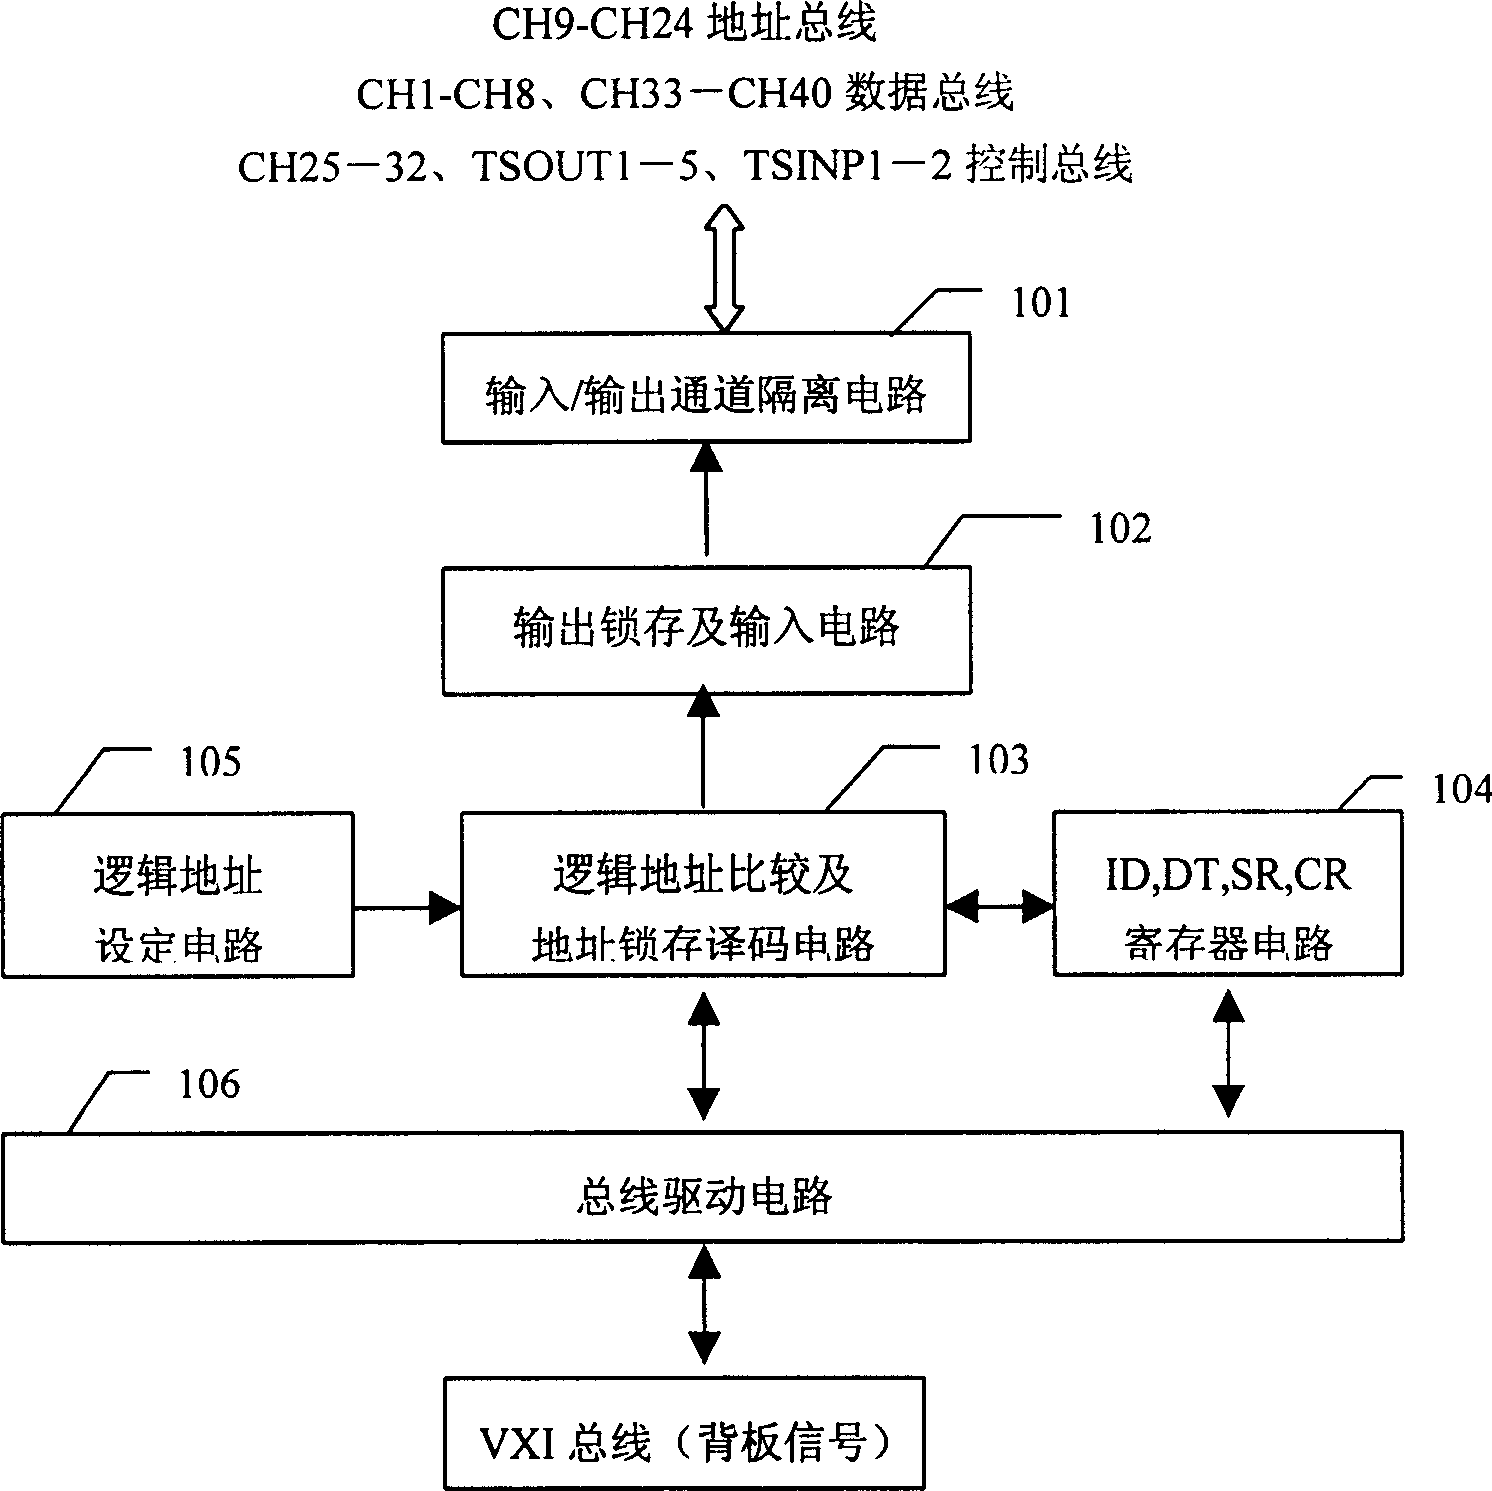 Method for simulating ISA bus with VXI digital I/O module